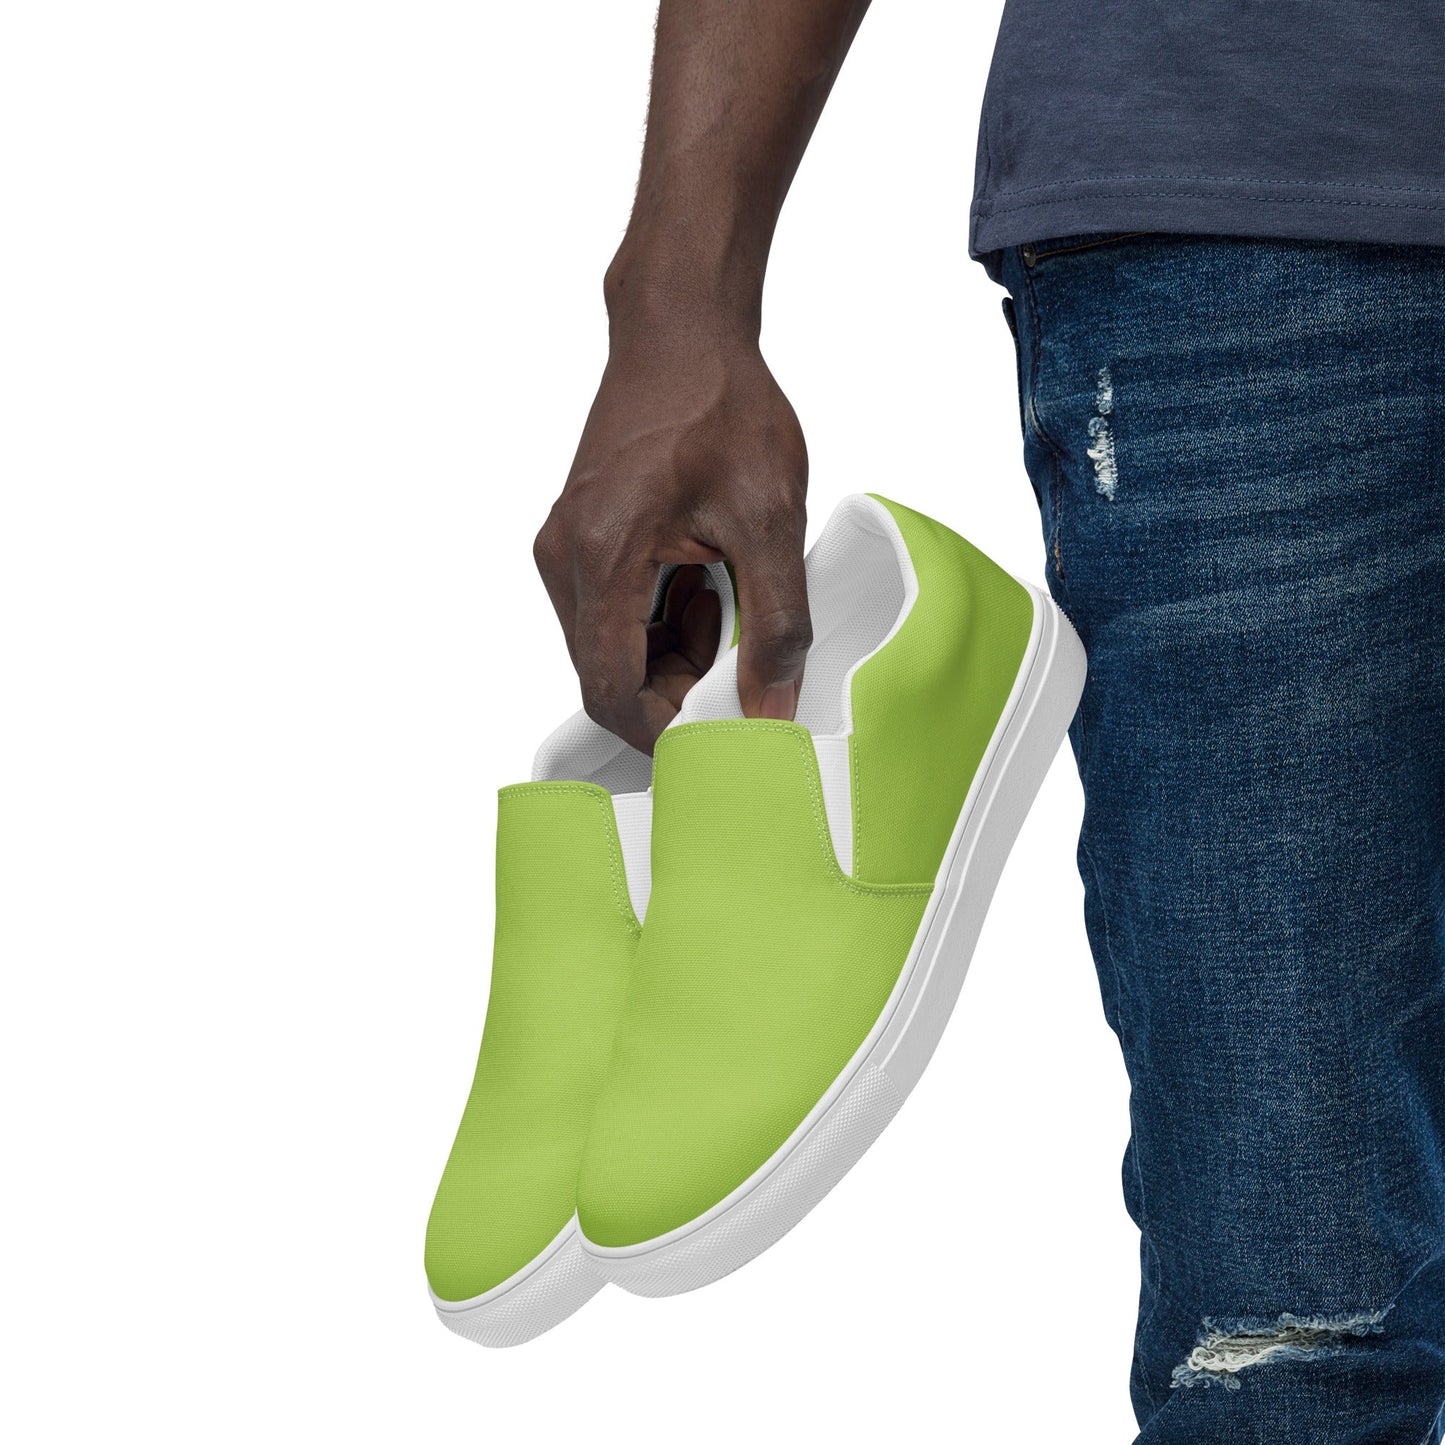 klasneakers Men’s slip-on canvas shoes - Light Olive